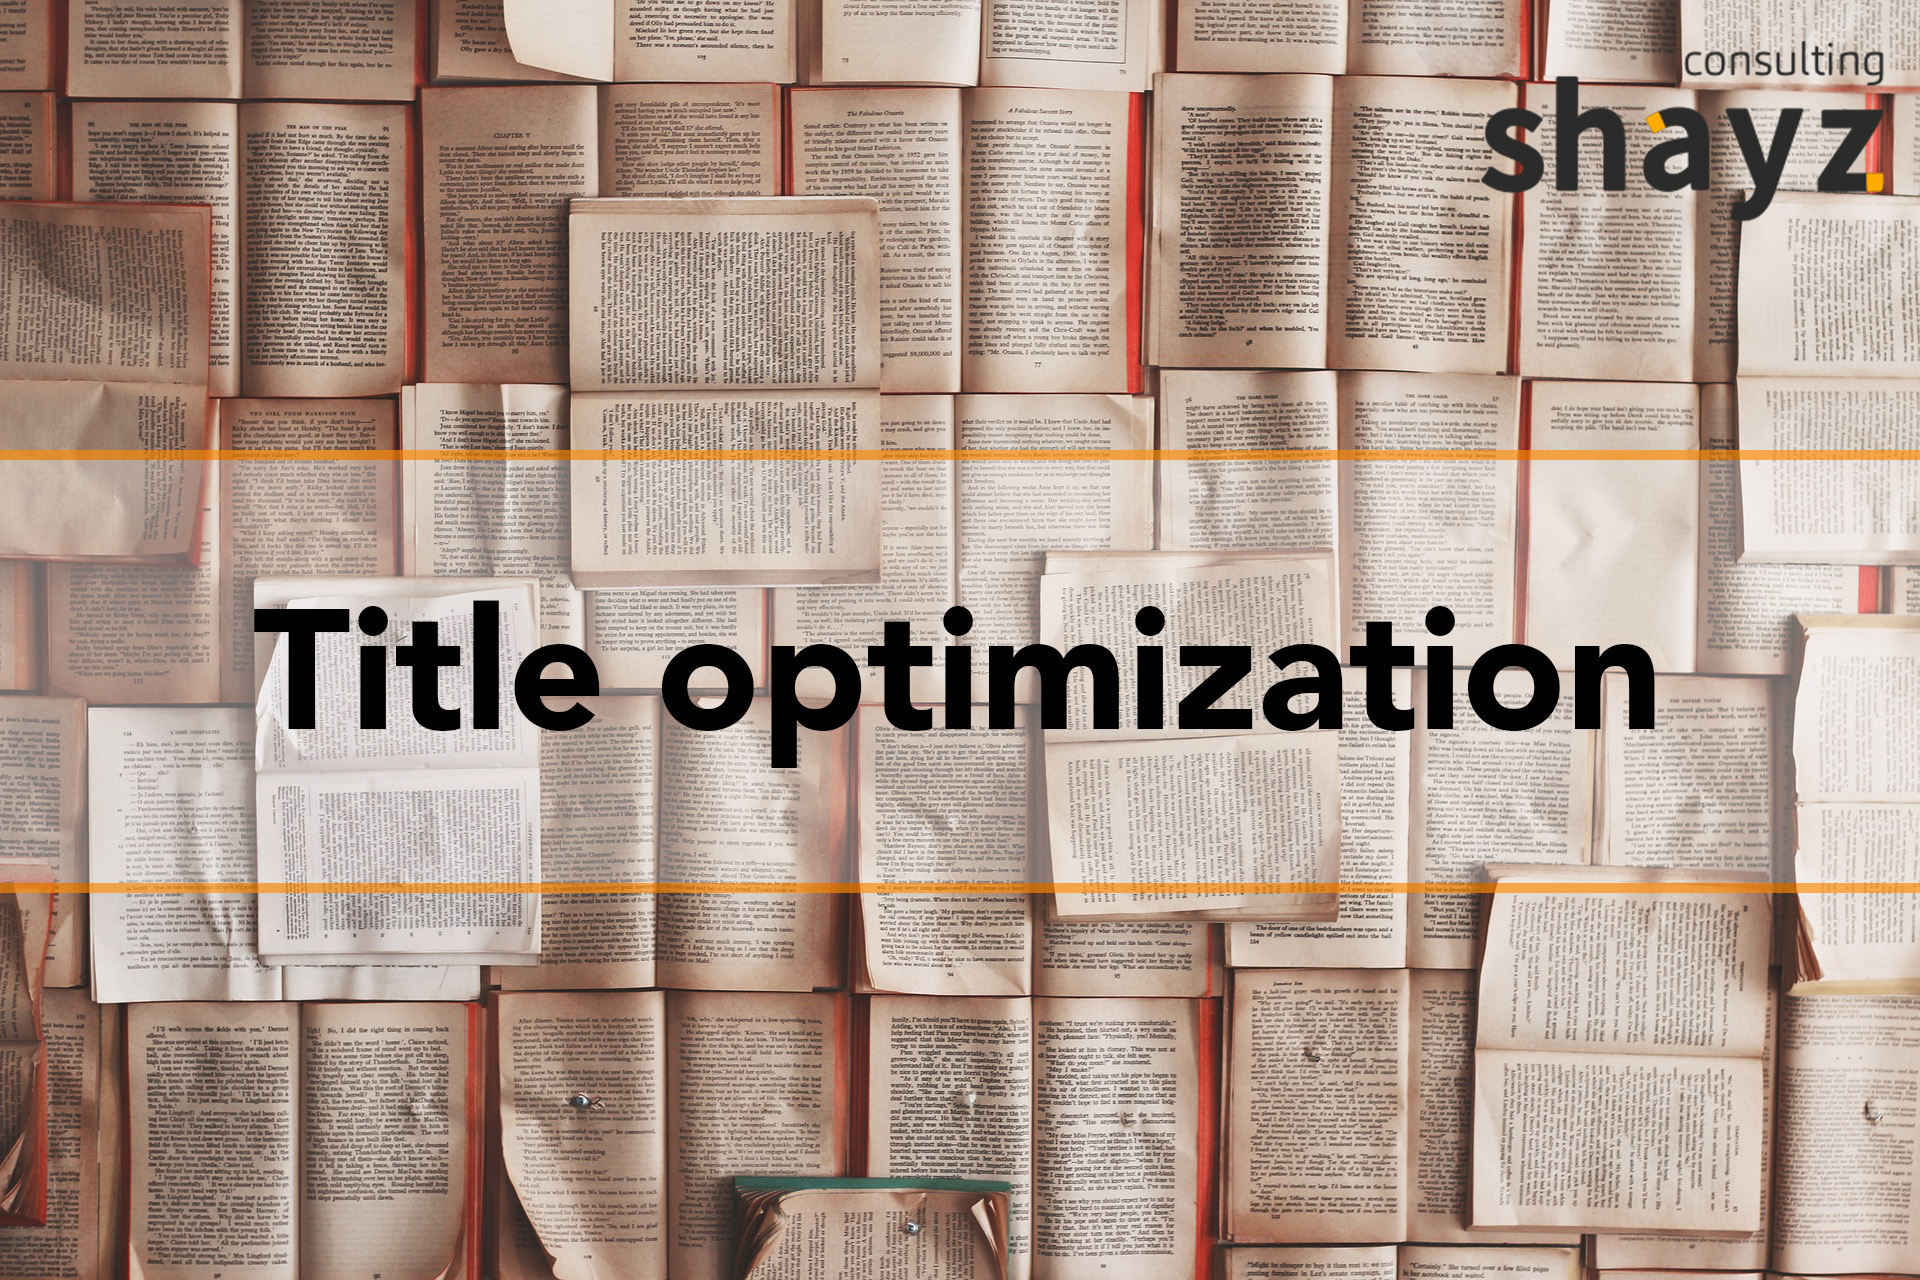  Title optimization